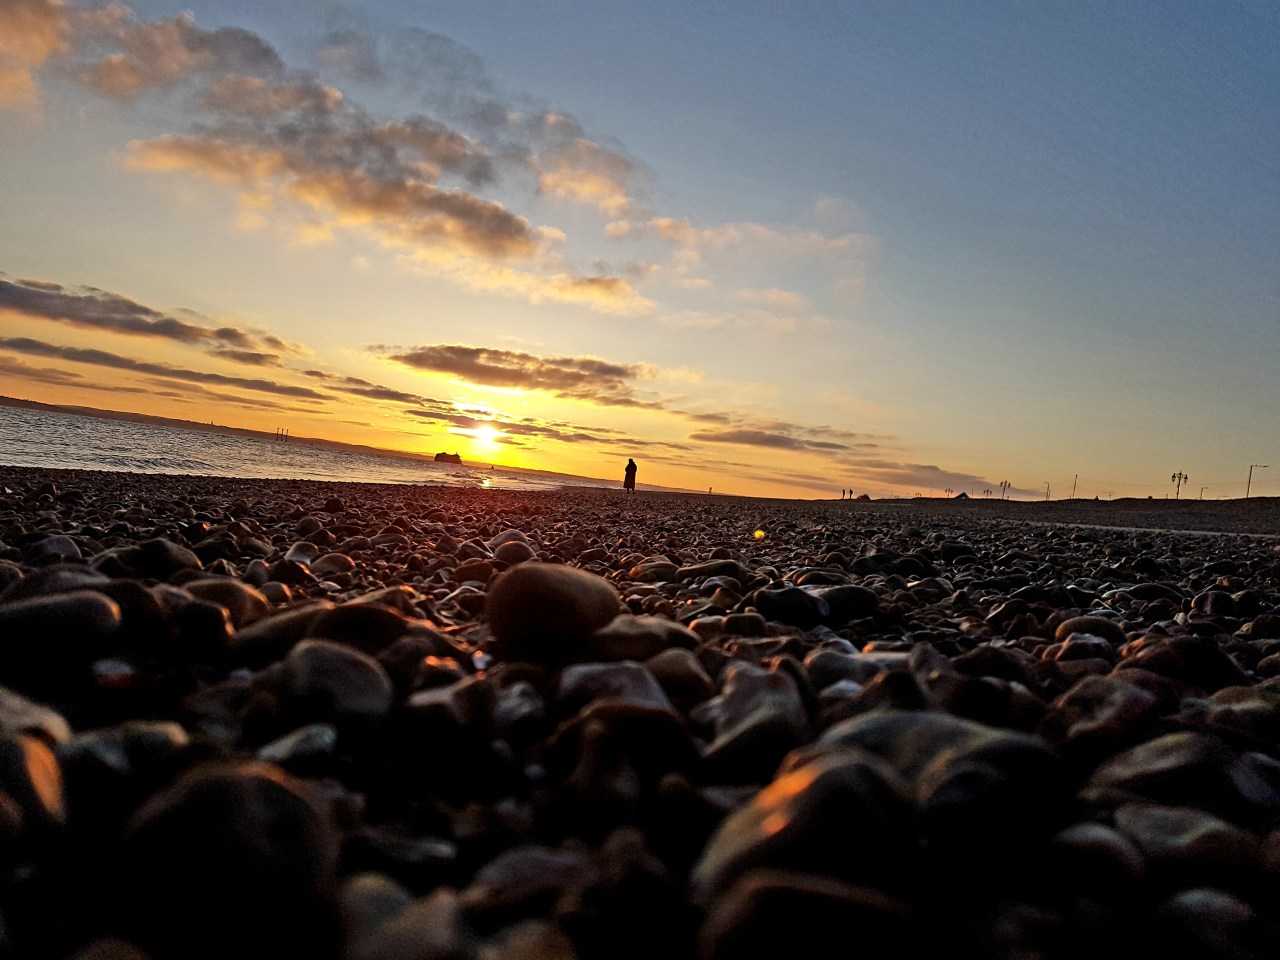 Sunset across the ocean at Southsea, Hampshire (Peter Chiykowski on Unsplash)